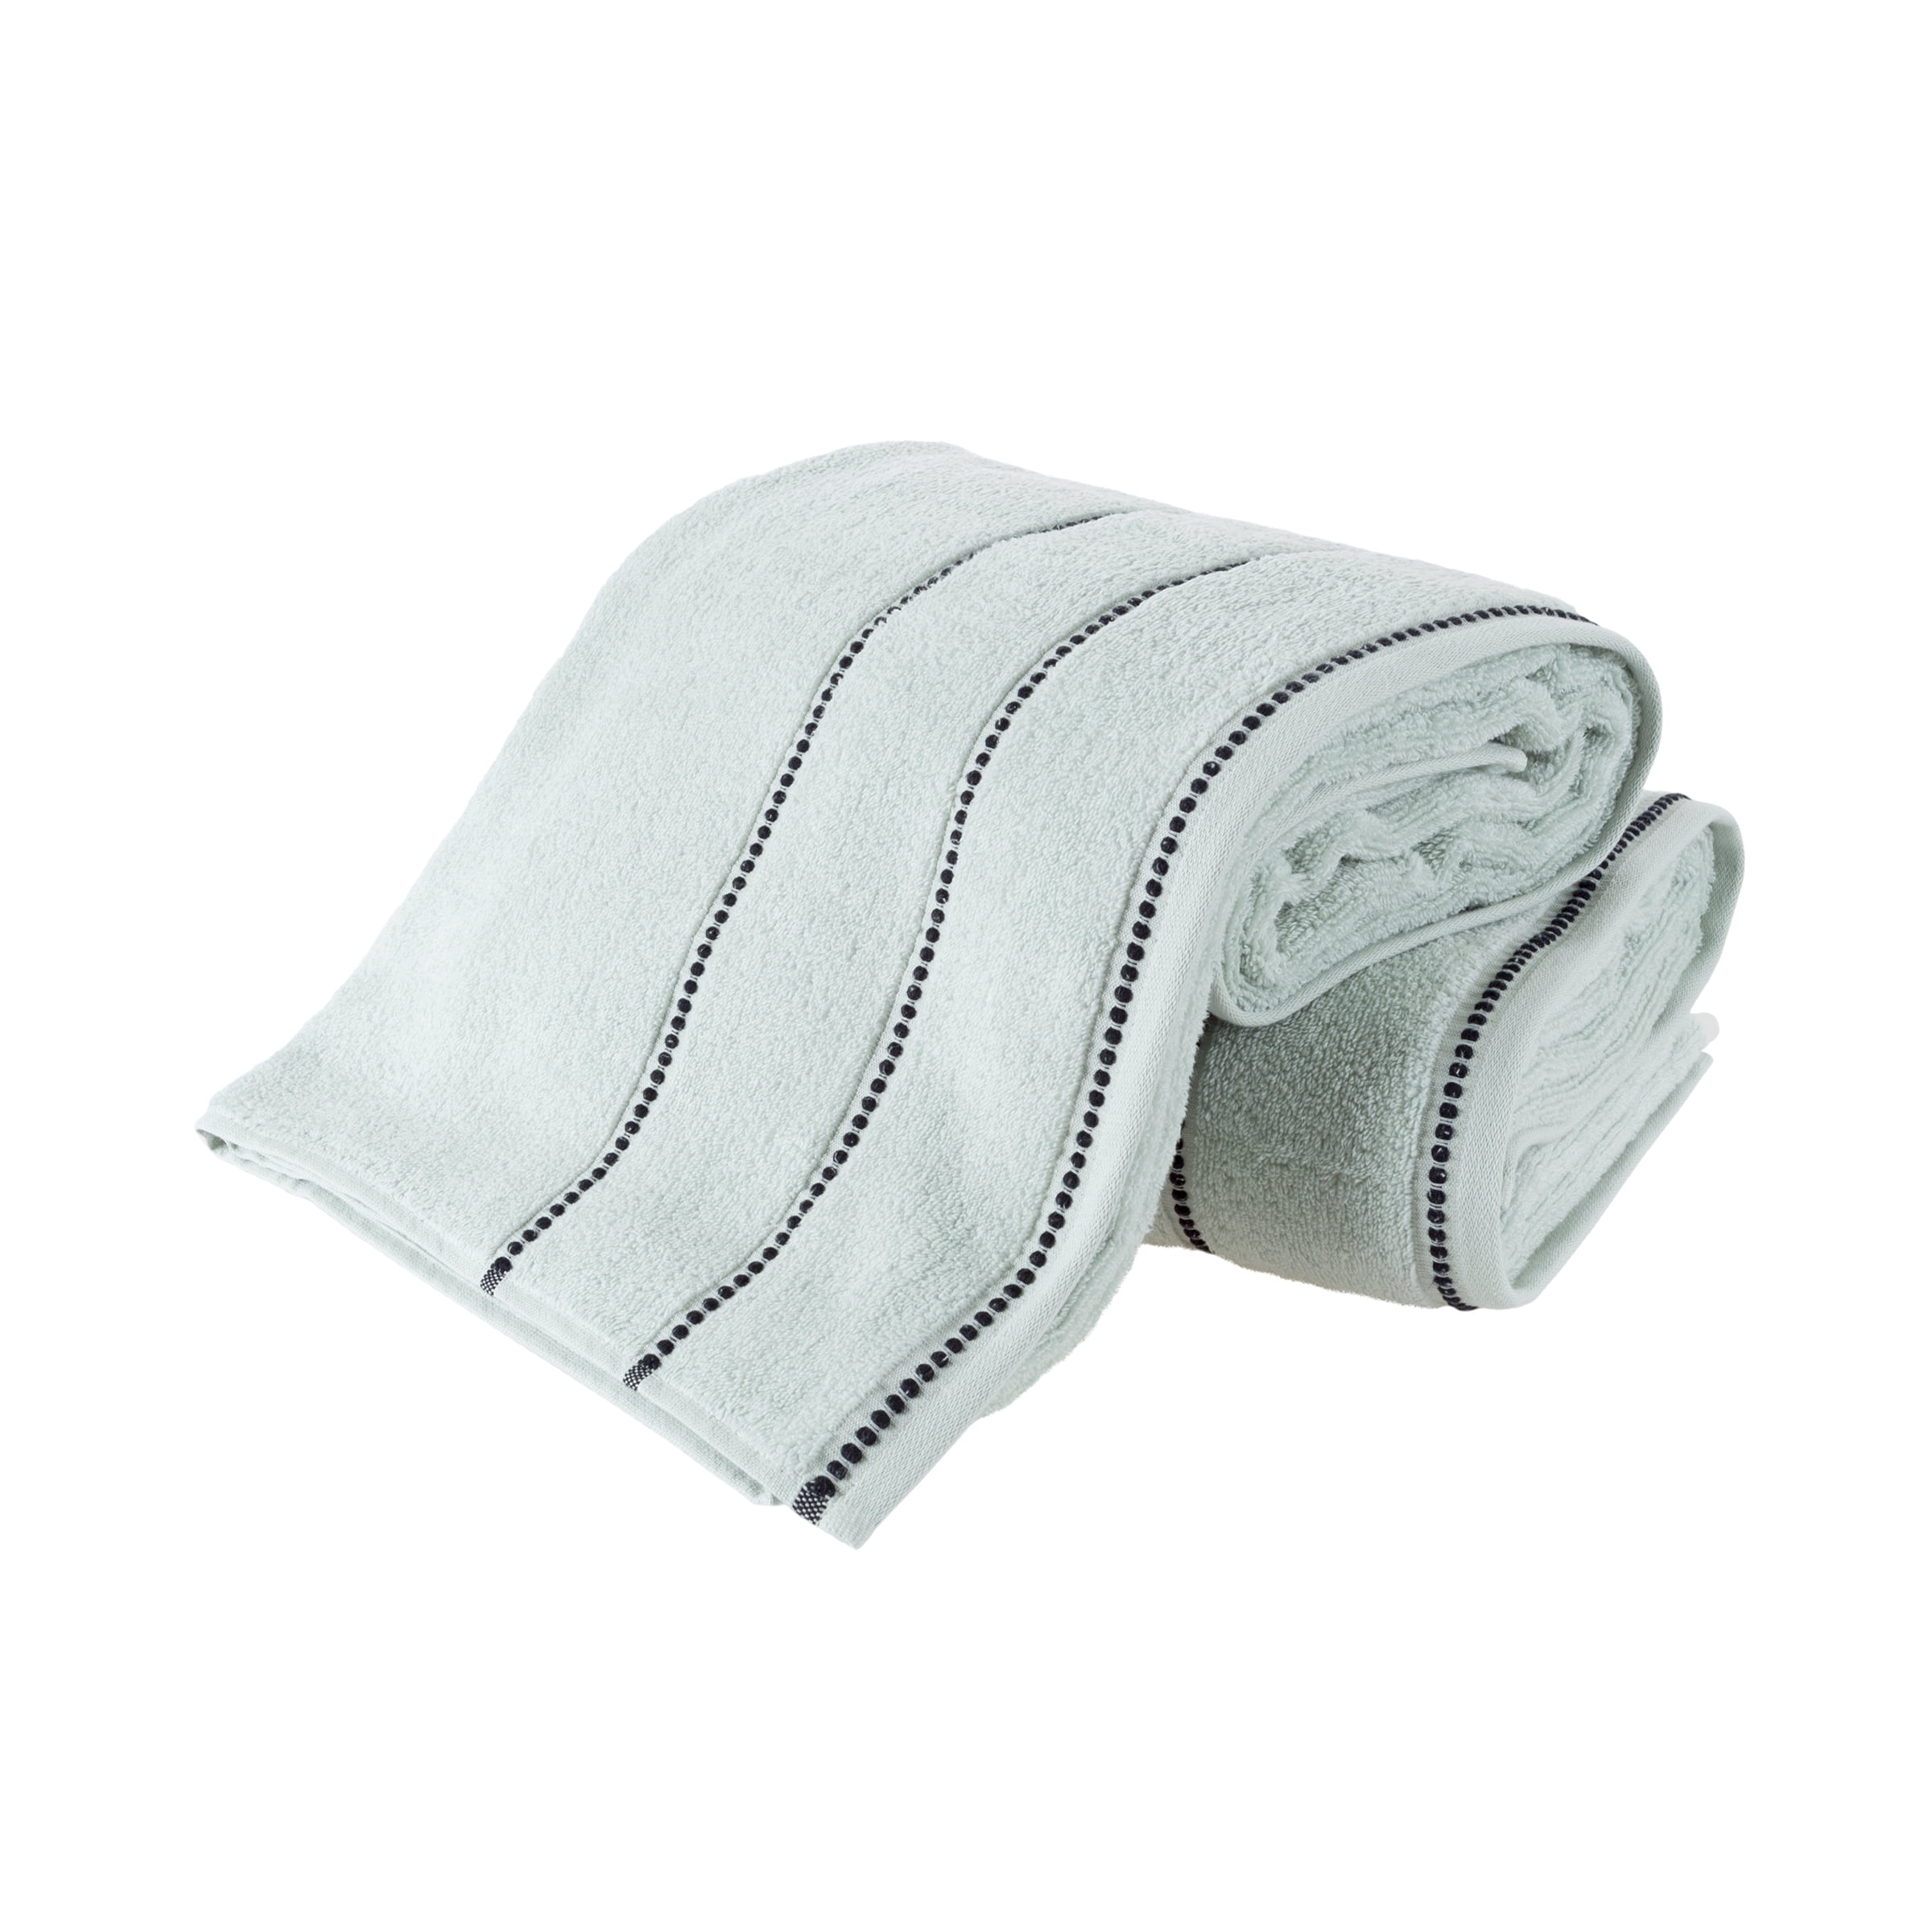 2-Piece Bath Towels Bale Gift Set – Double Looped Cotton Soft